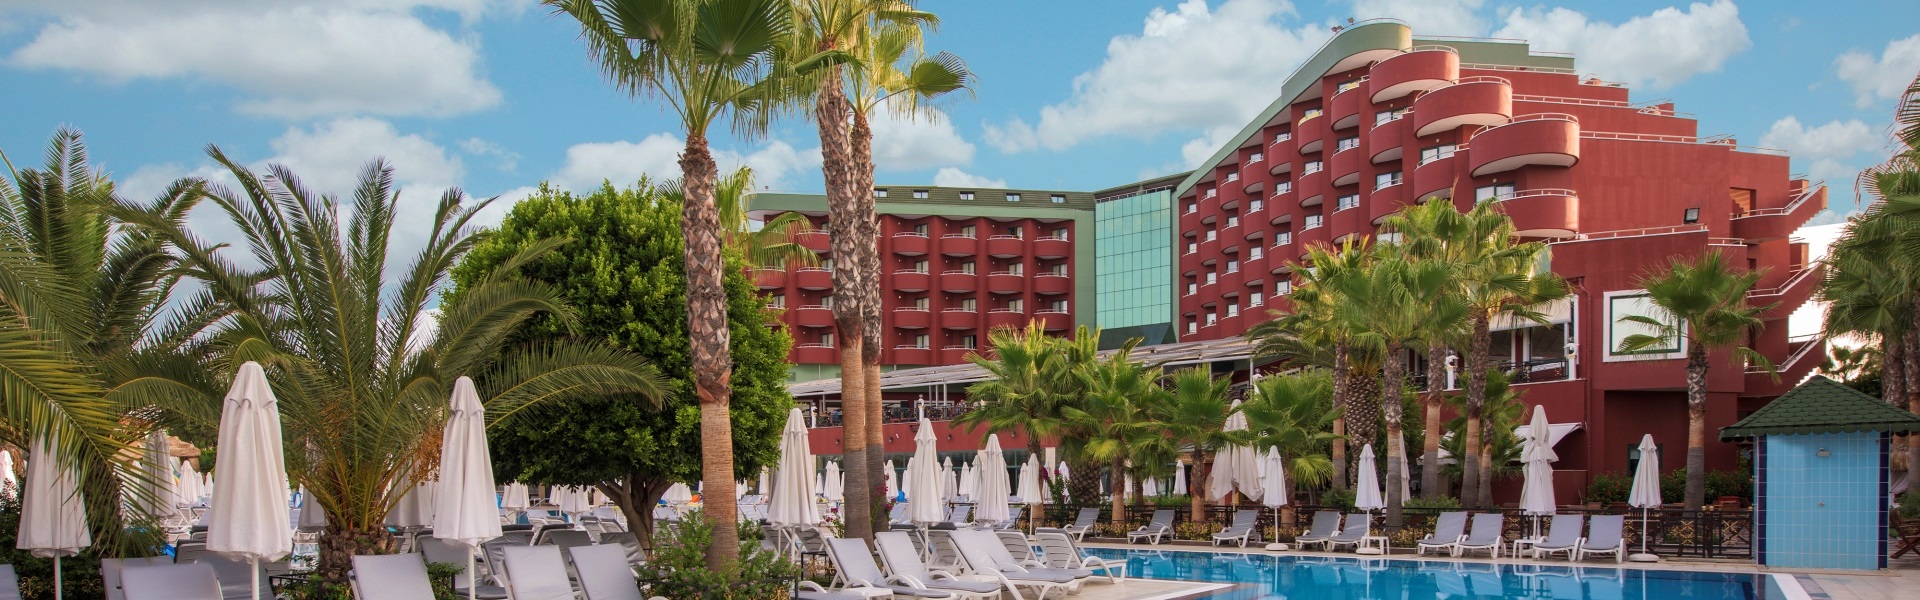 Delphin Deluxe Hotel Antalya Turkey | Online Reservation